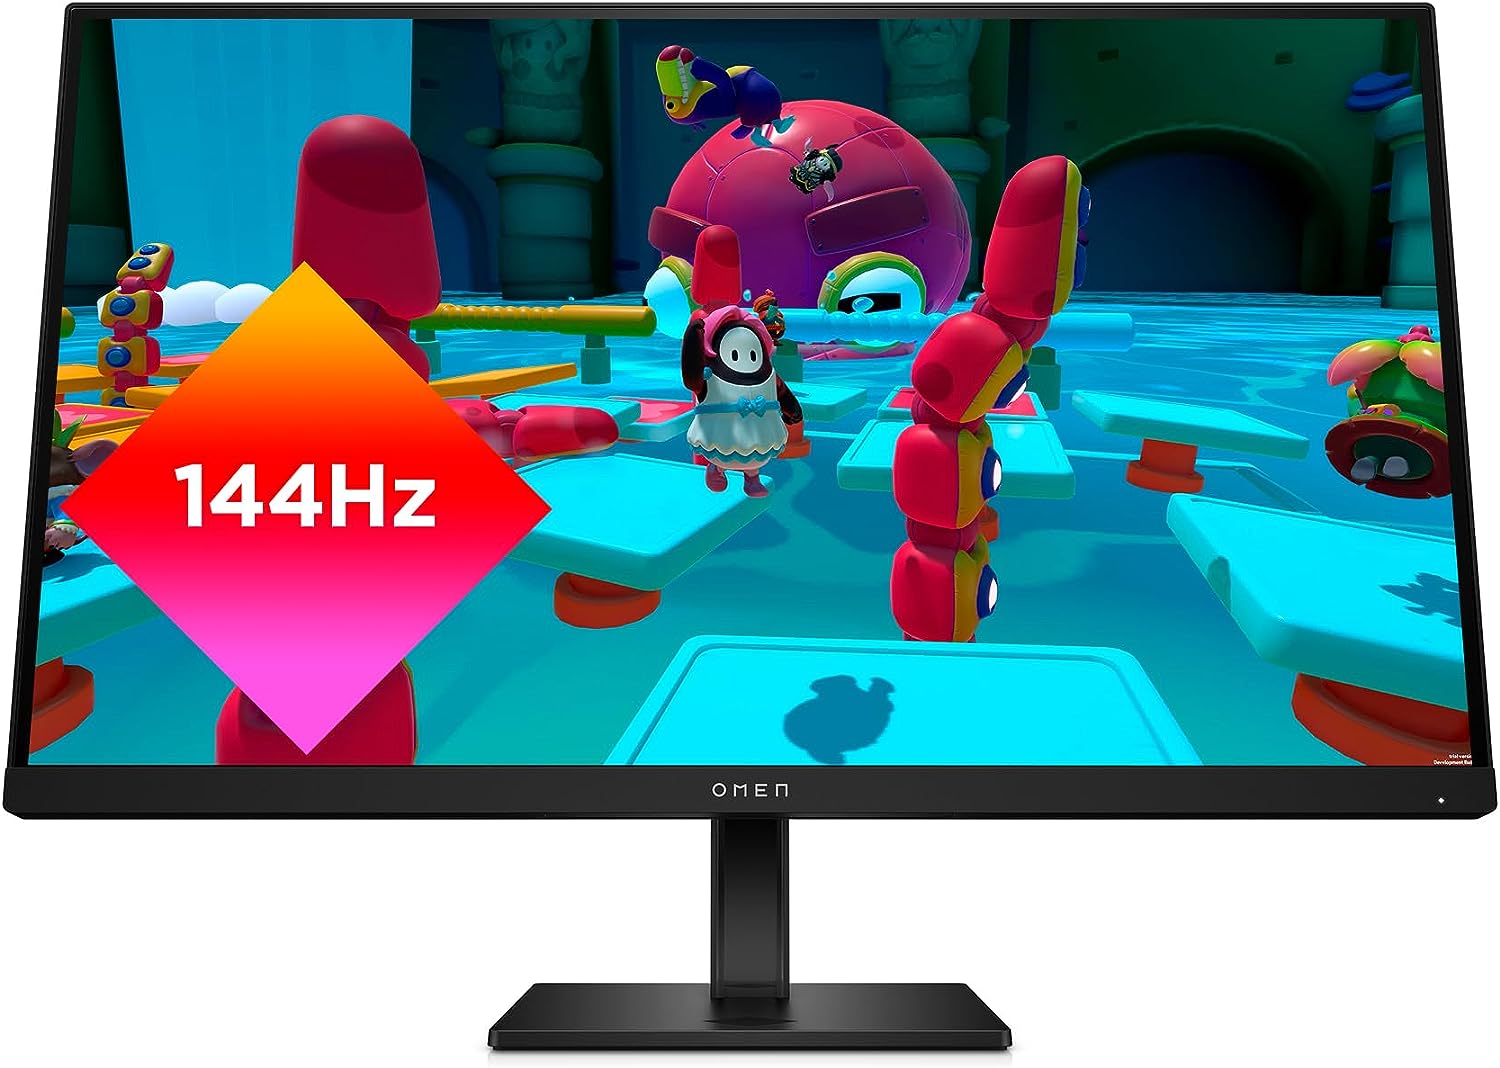 HP OMEN 27k UHD 144Hz Gaming Monitor